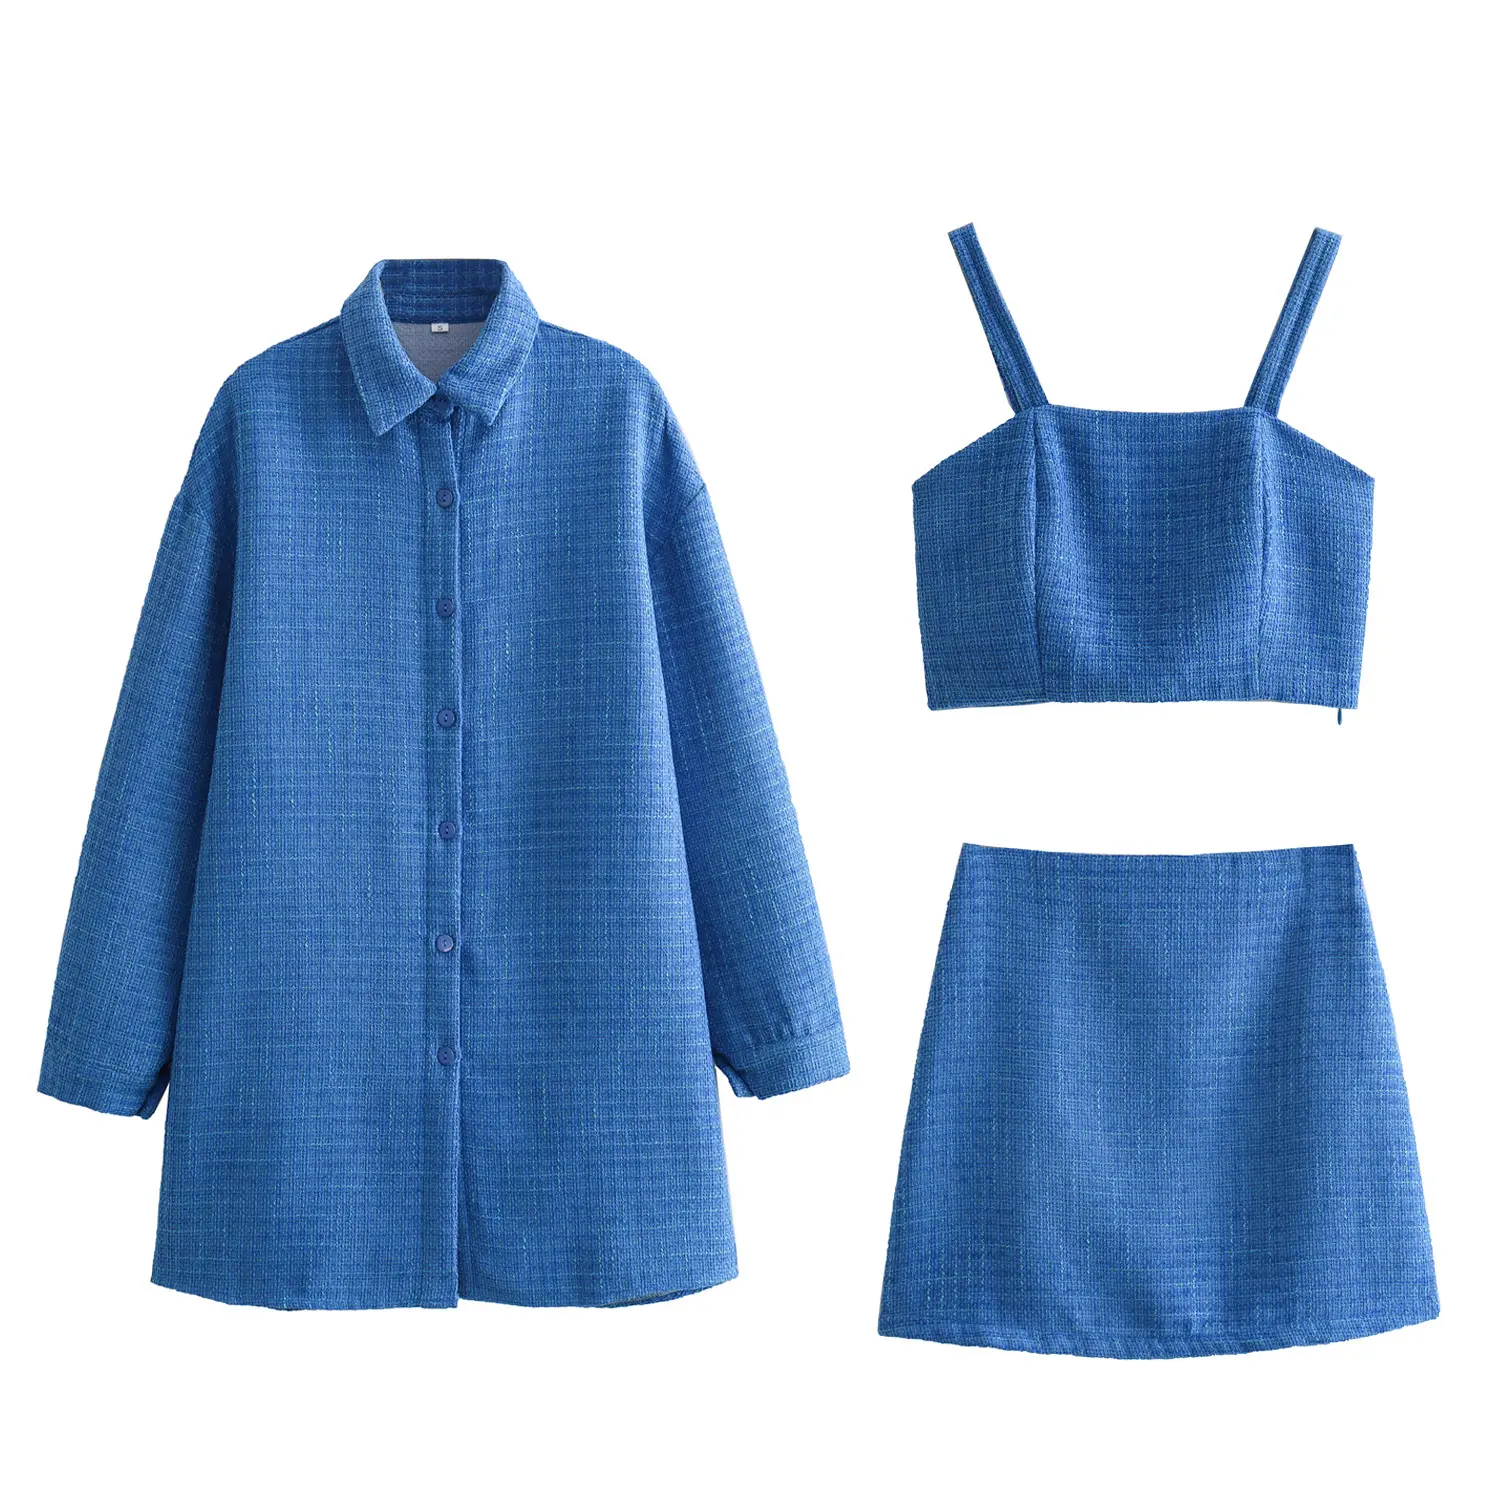 Turn down collar manga longa jaqueta spaghetti strap top colheita cor azul mini saia das mulheres casual 3 peça set